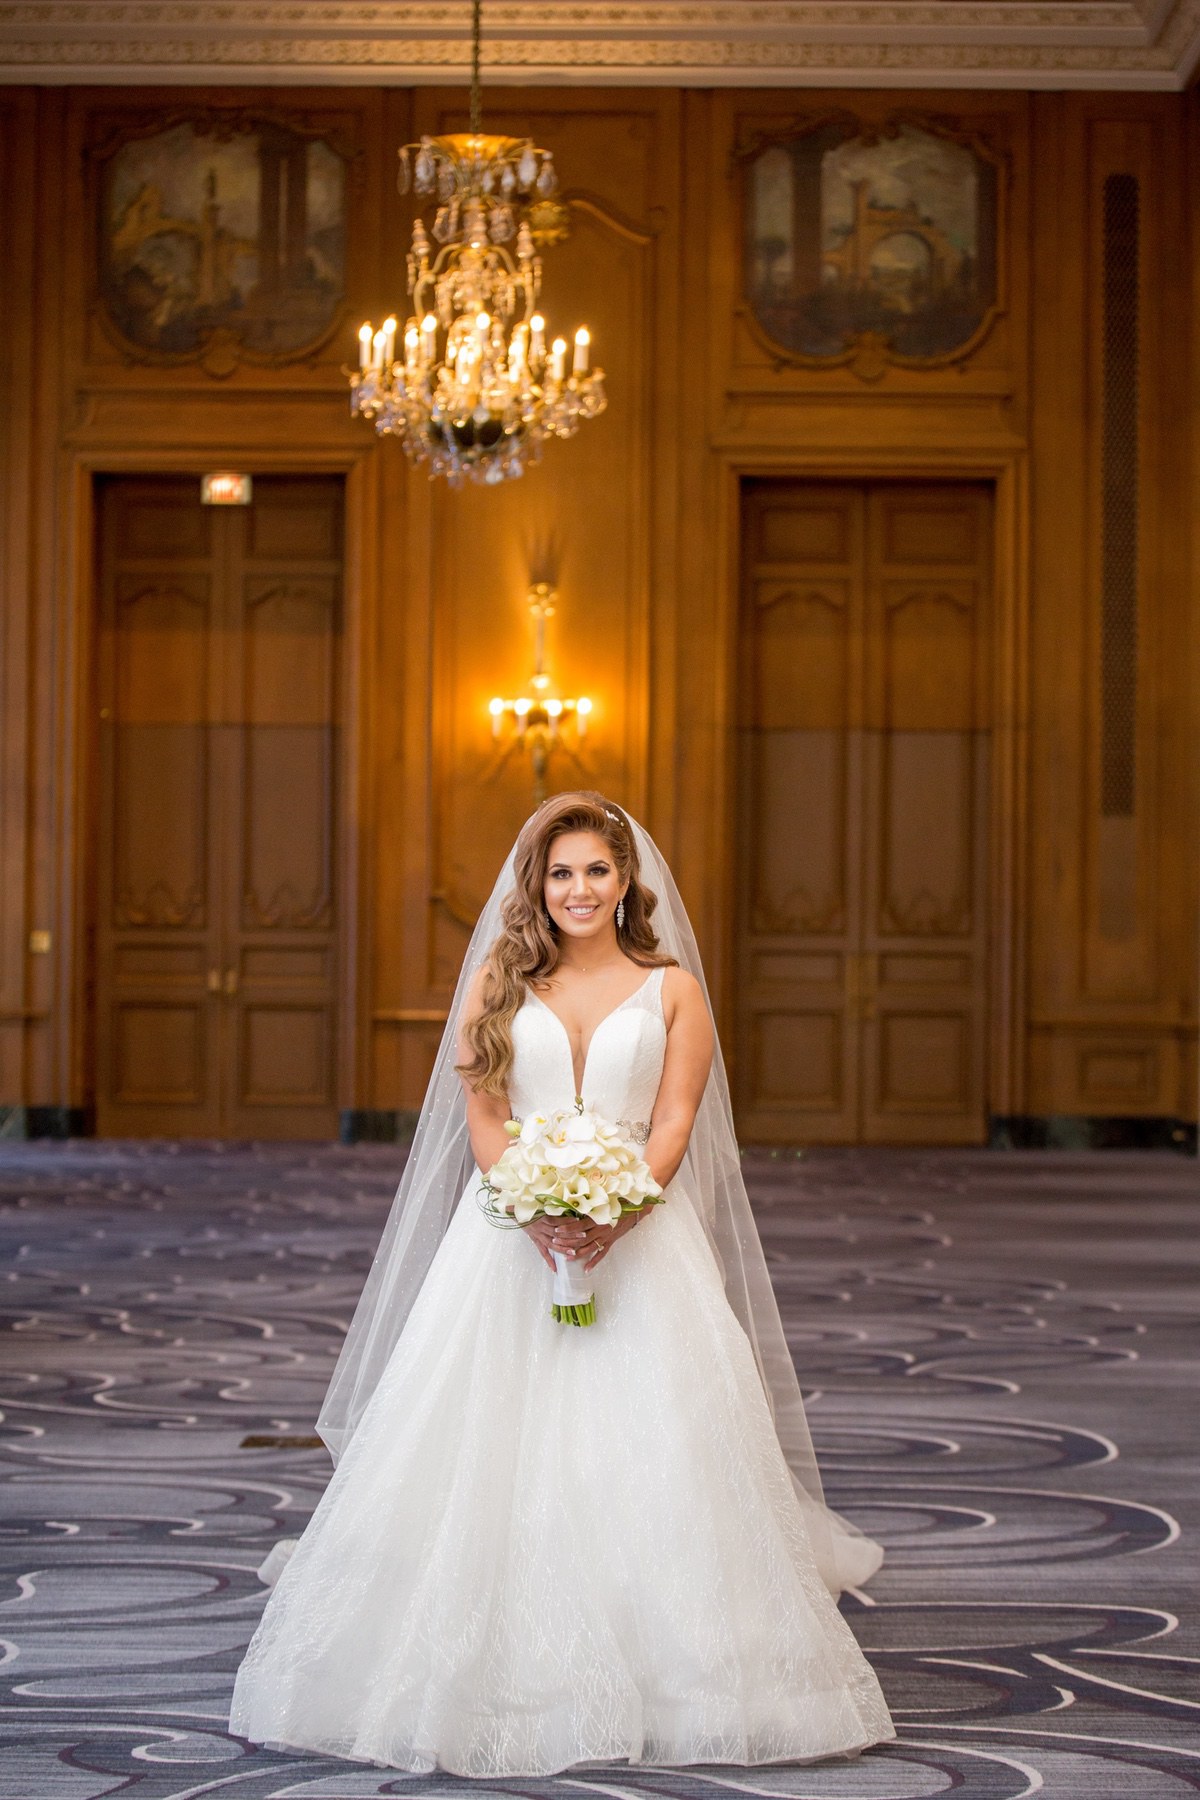 Le Cape Weddings - Laila and Anthony - Chicago Wedding - Bride Portraits -23.jpg